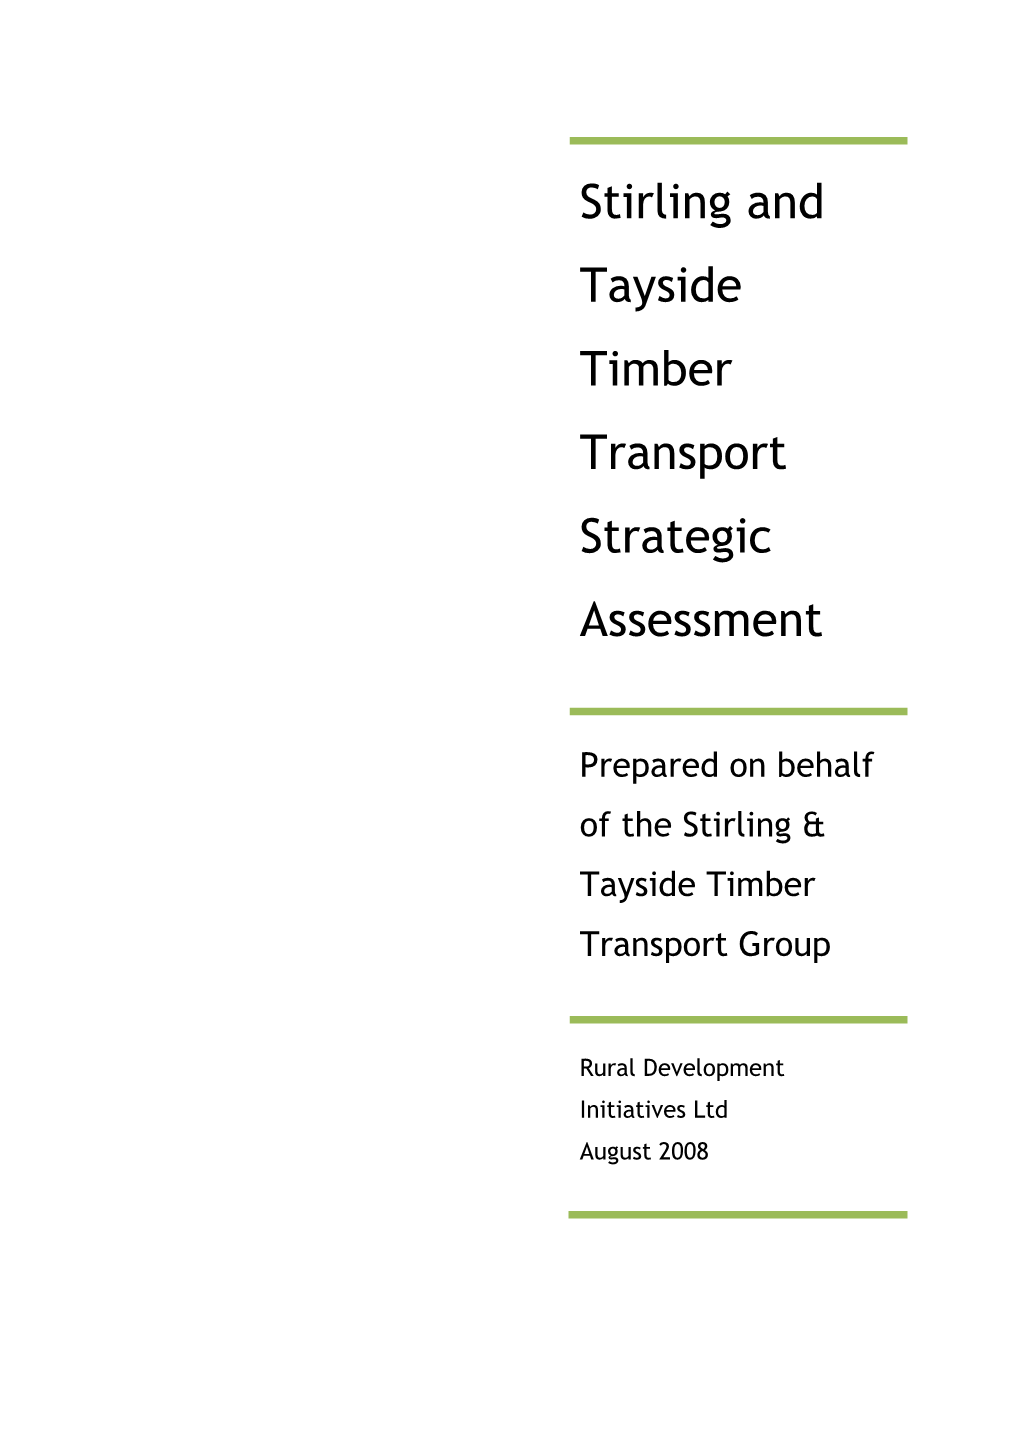 Stirling and Tayside Timber Transport Strategic Assessment